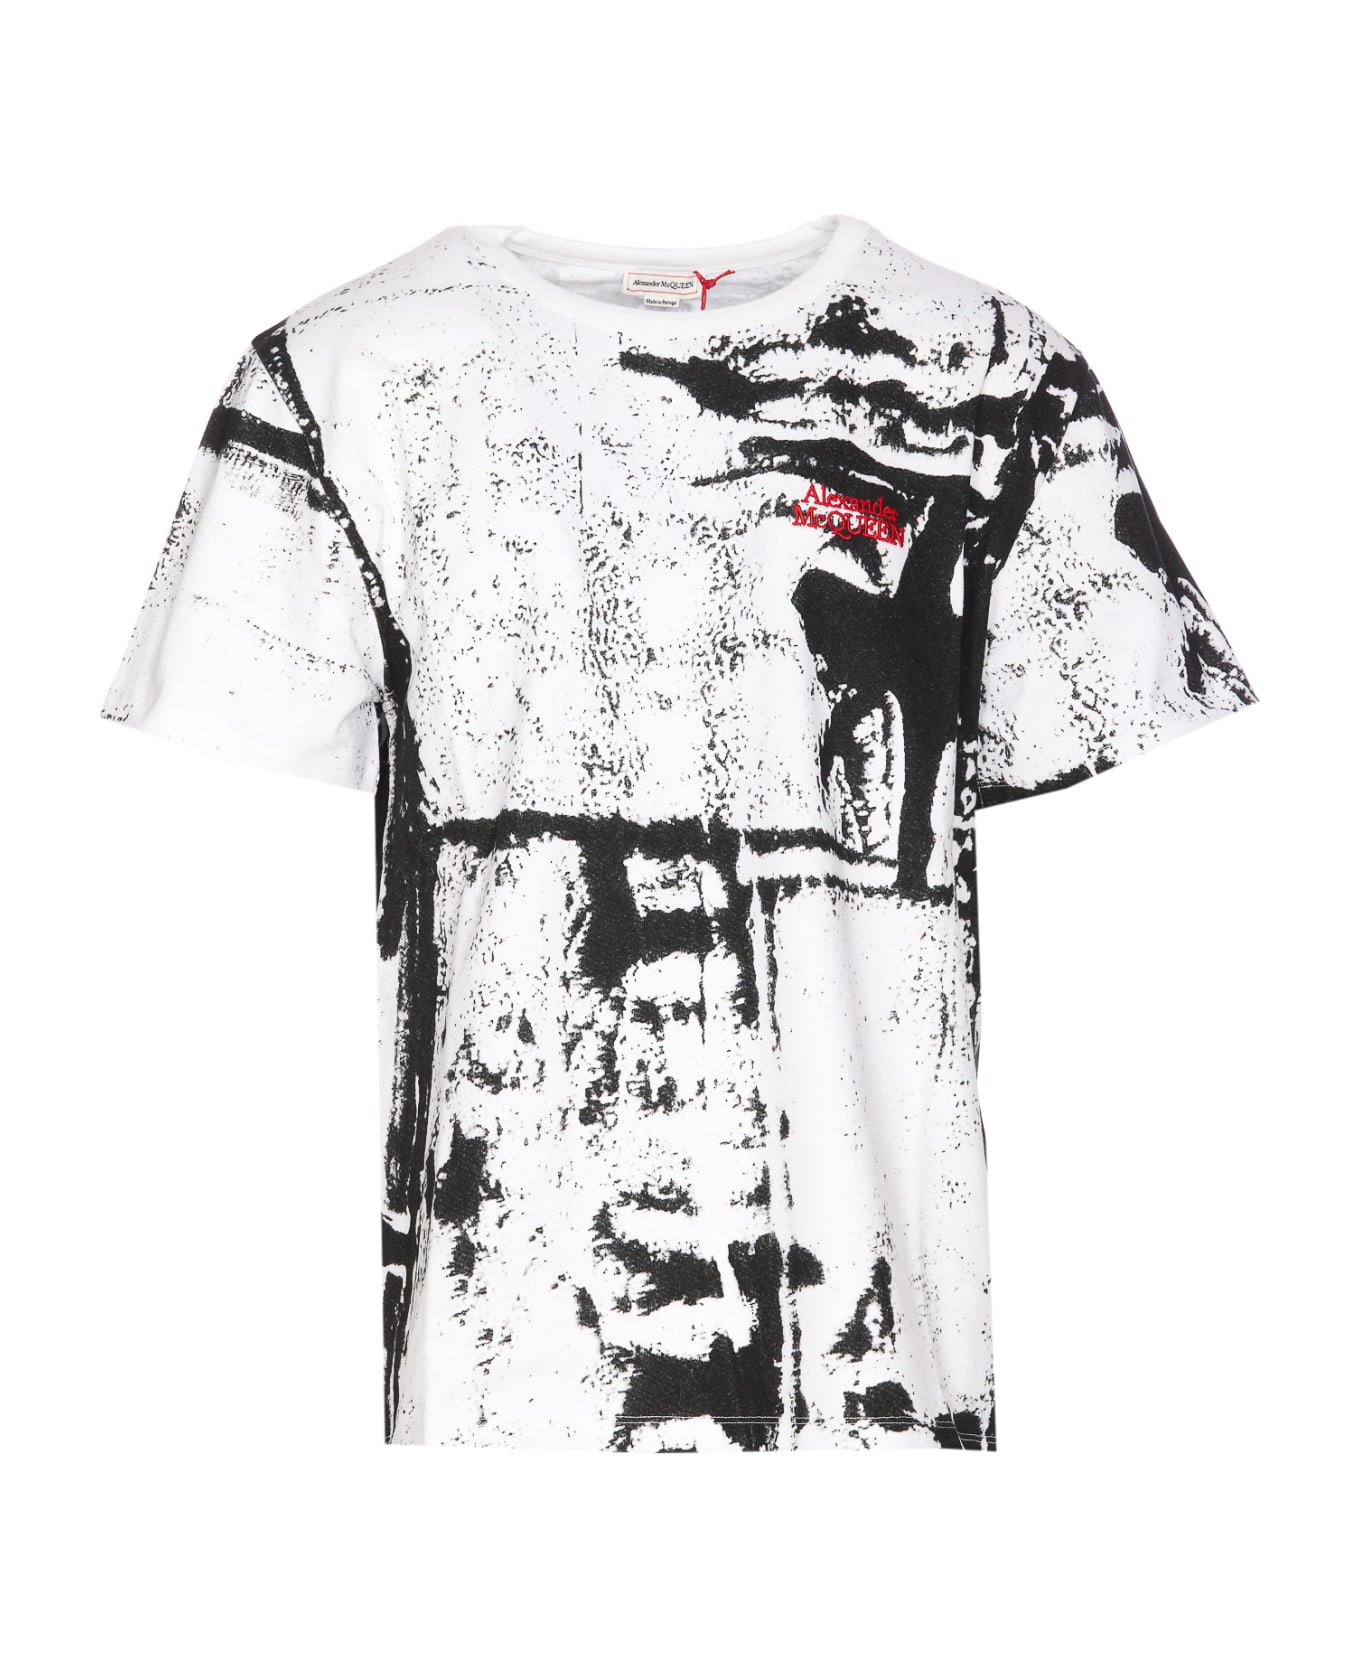 Alexander McQueen All-over Print T-shirt - White Black シャツ